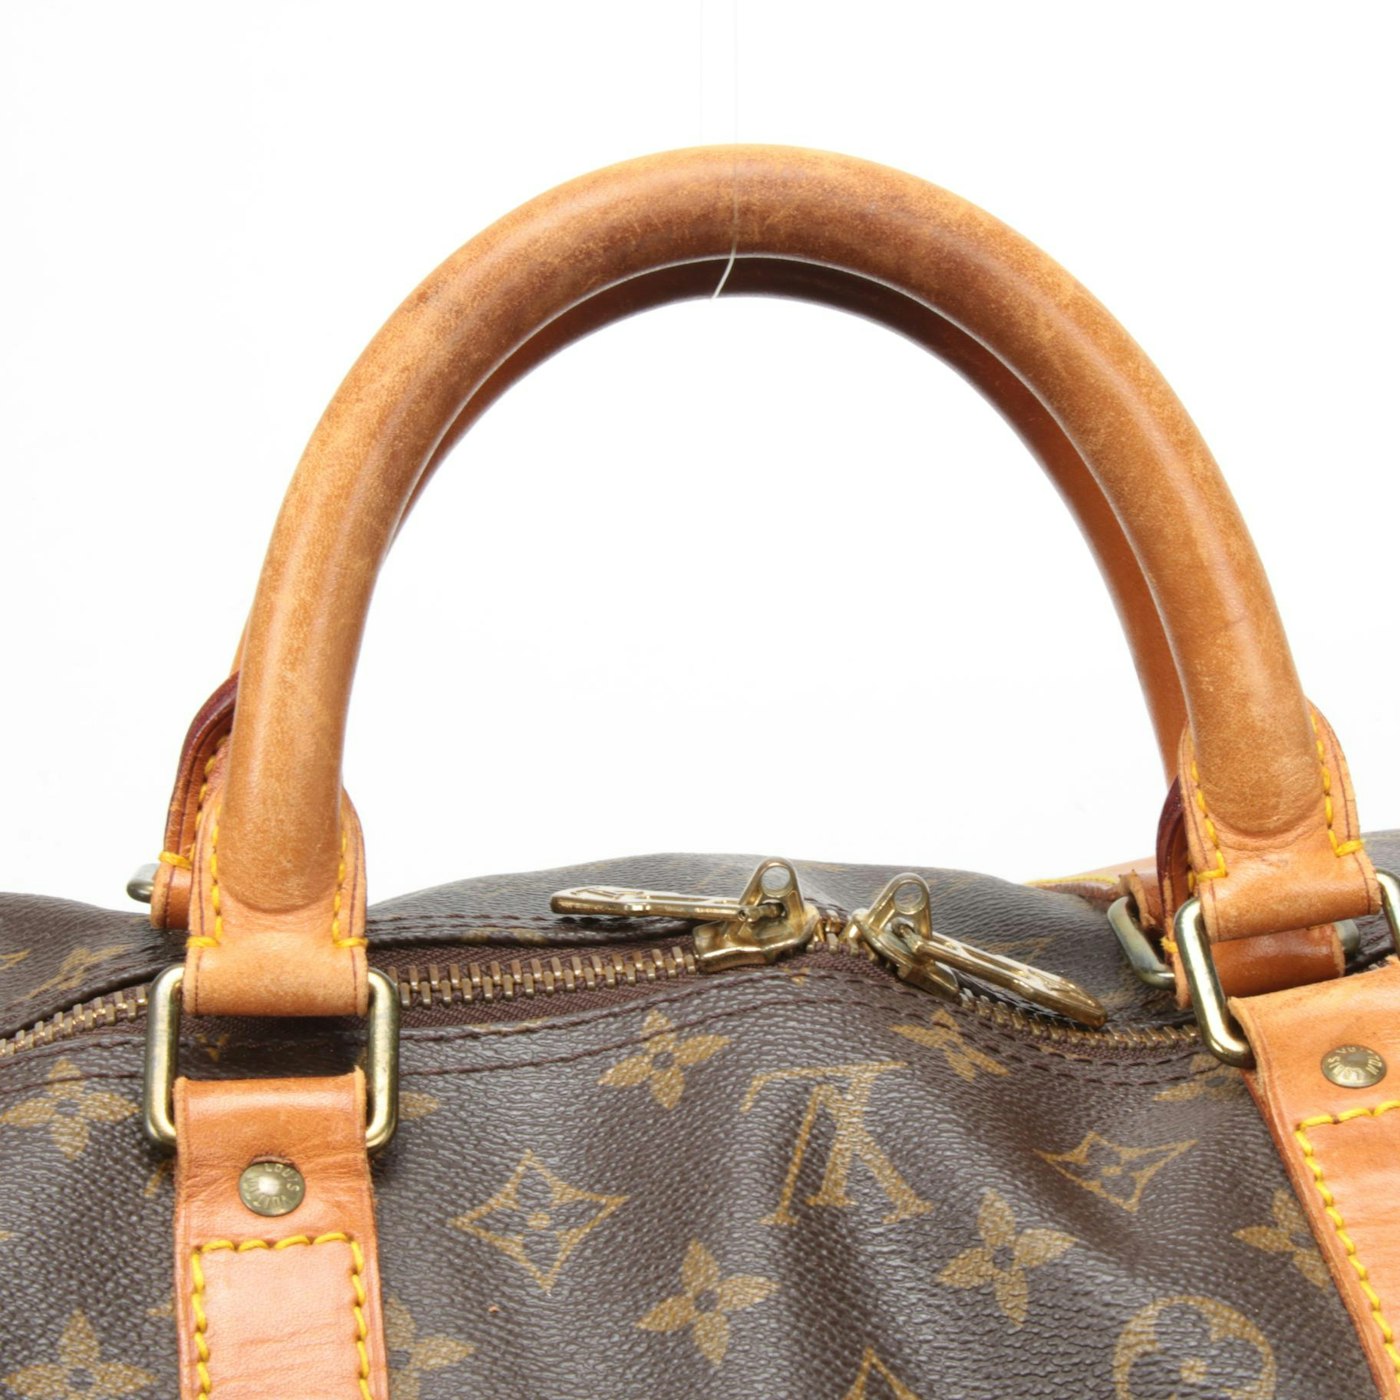 Louis Vuitton Keepall 55 Duffle Bag in Monogram Canvas and Vachetta Leather | EBTH